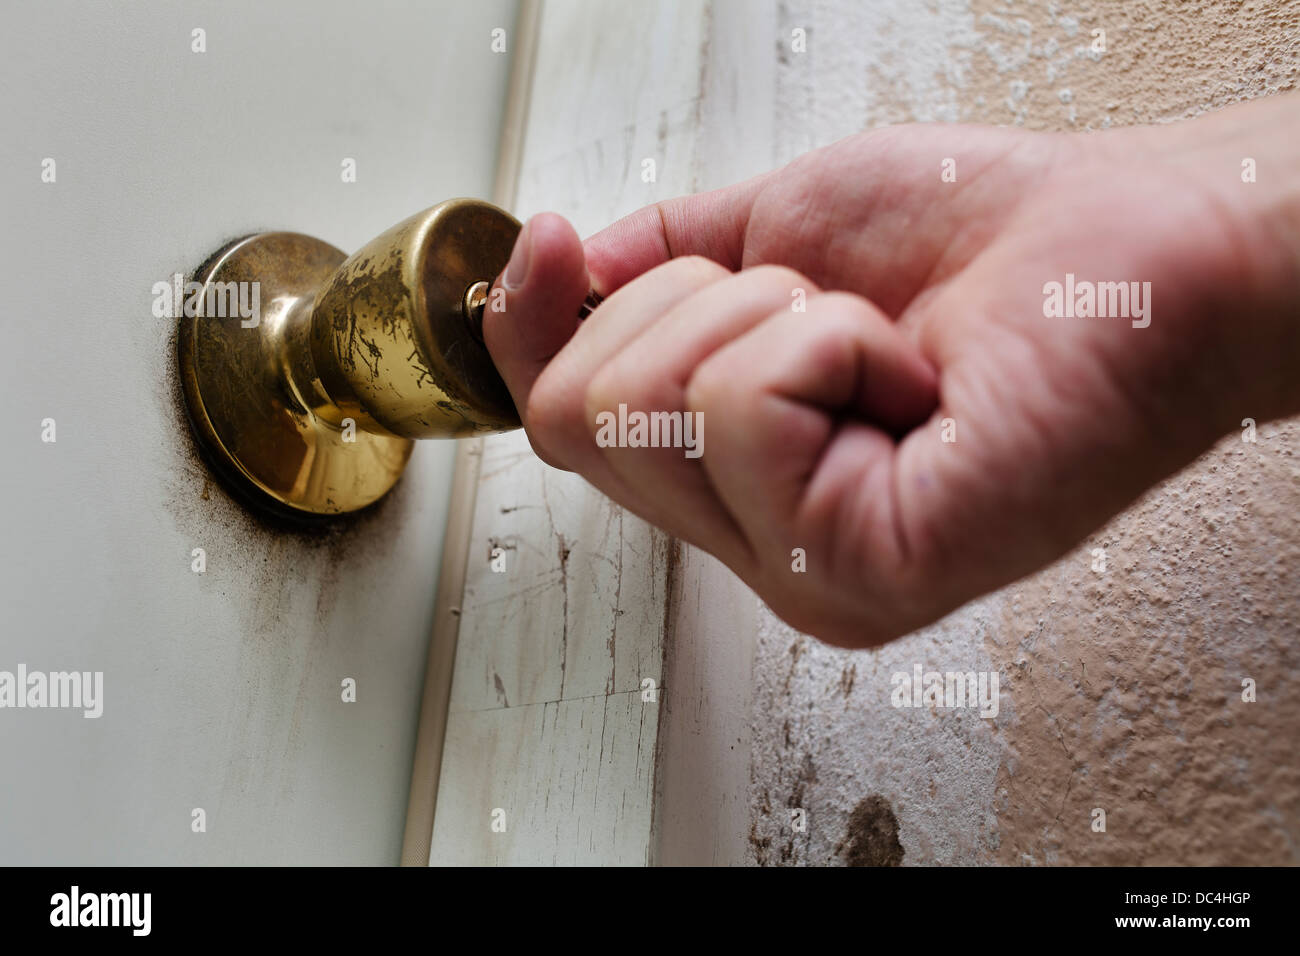 Unlocking or locking a door. Stock Photo